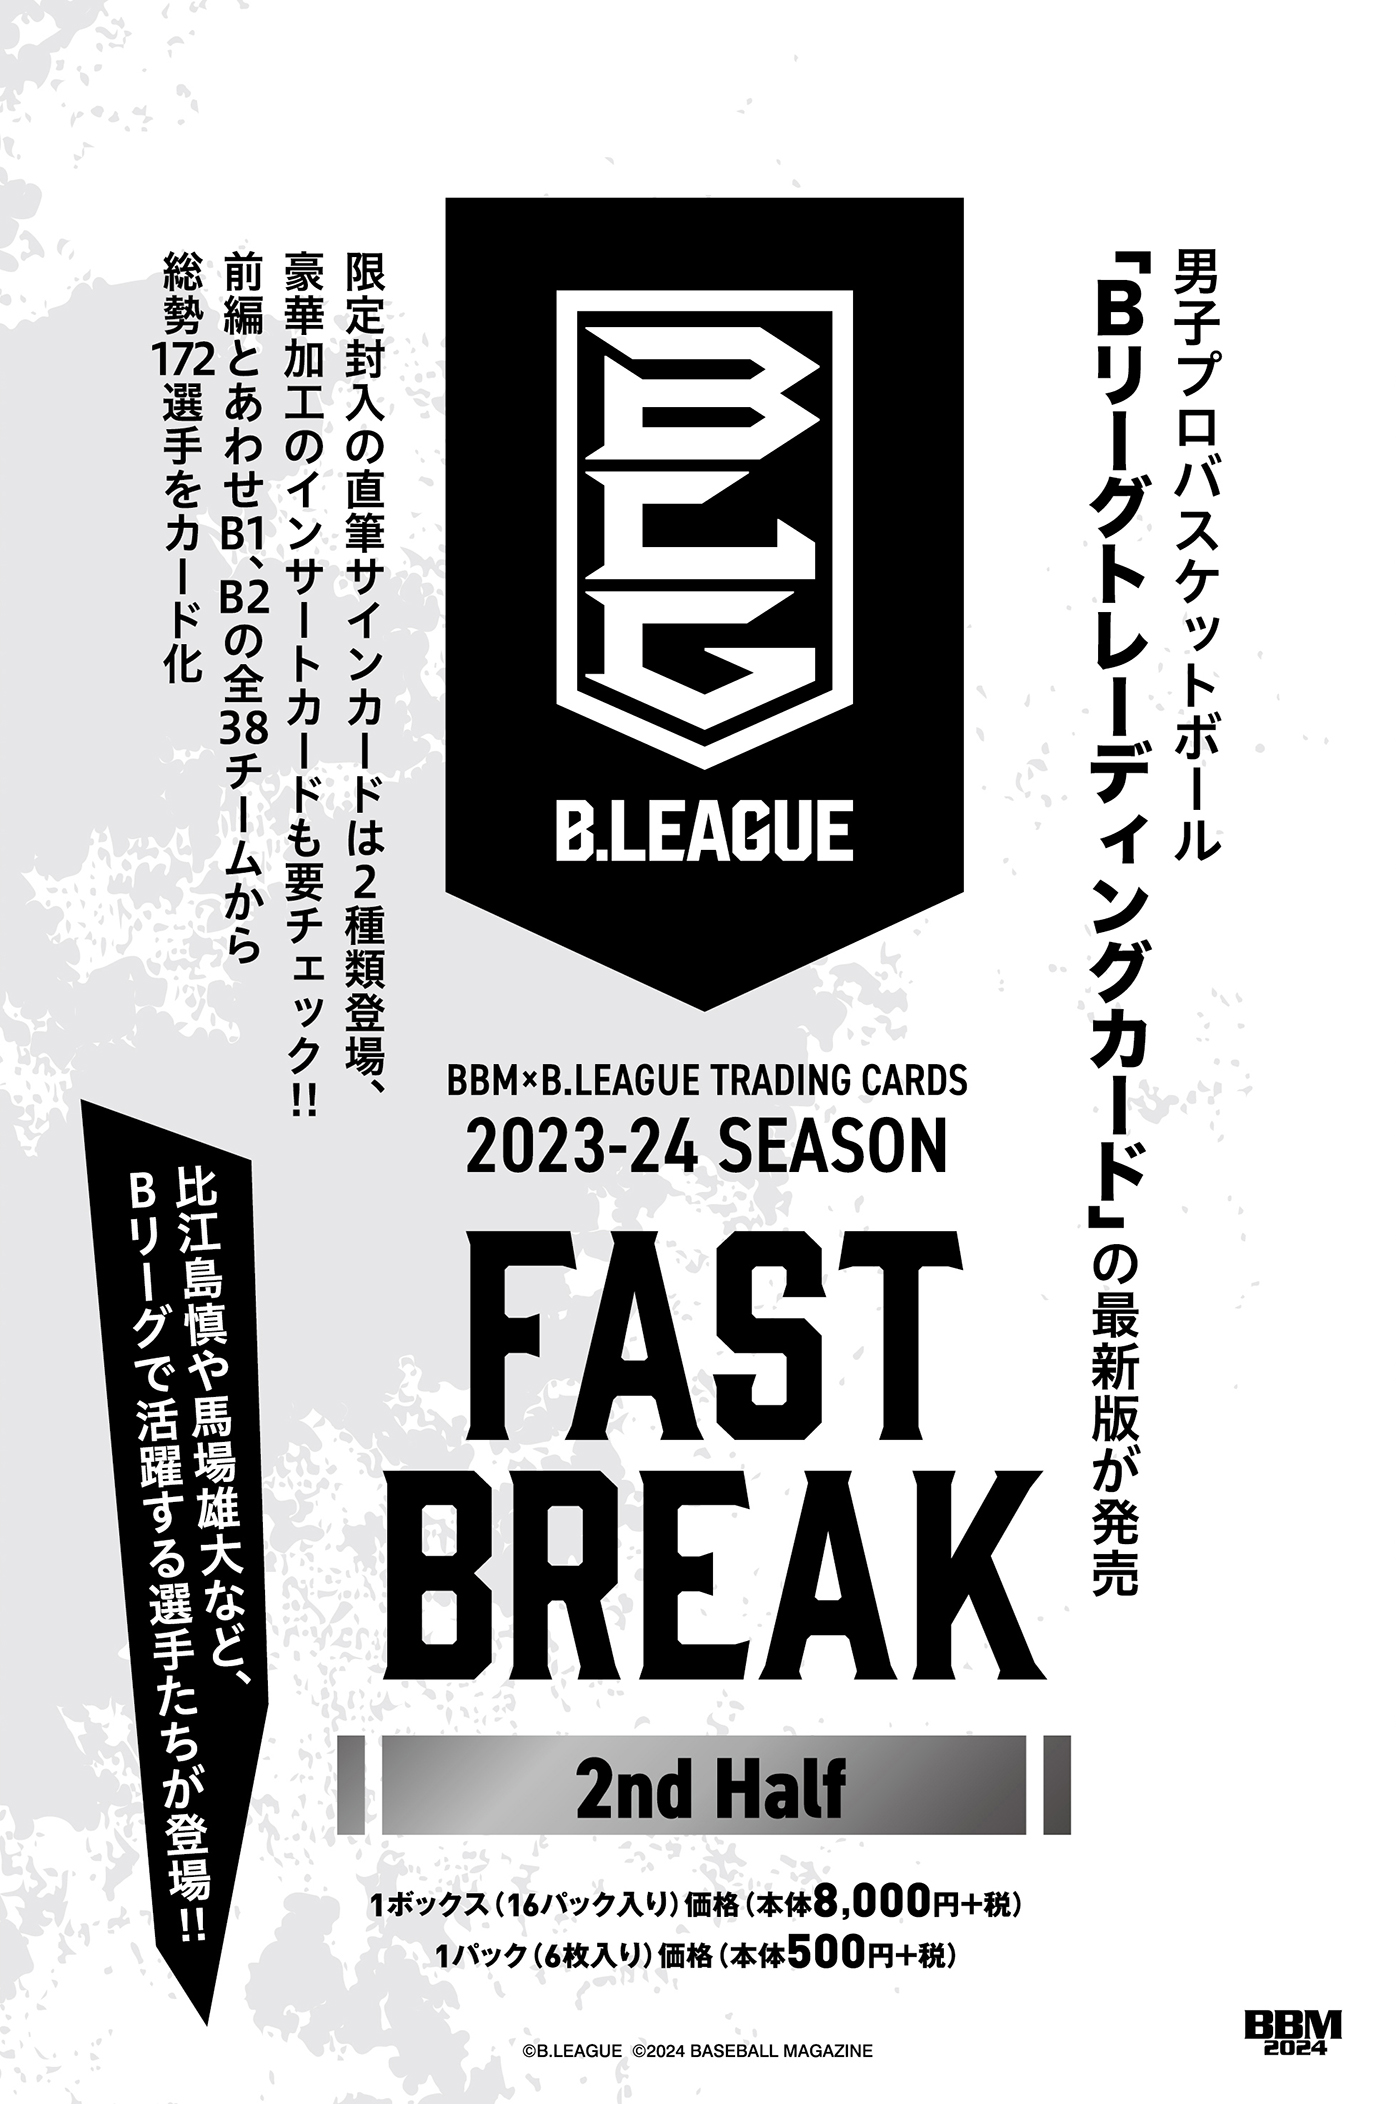 🏀 BBM Ｘ B.LEAGUE TRADING CARDS 2023-24 SEASON FAST BREAK 2nd Half【製品情報】 |  Trading Card Journal